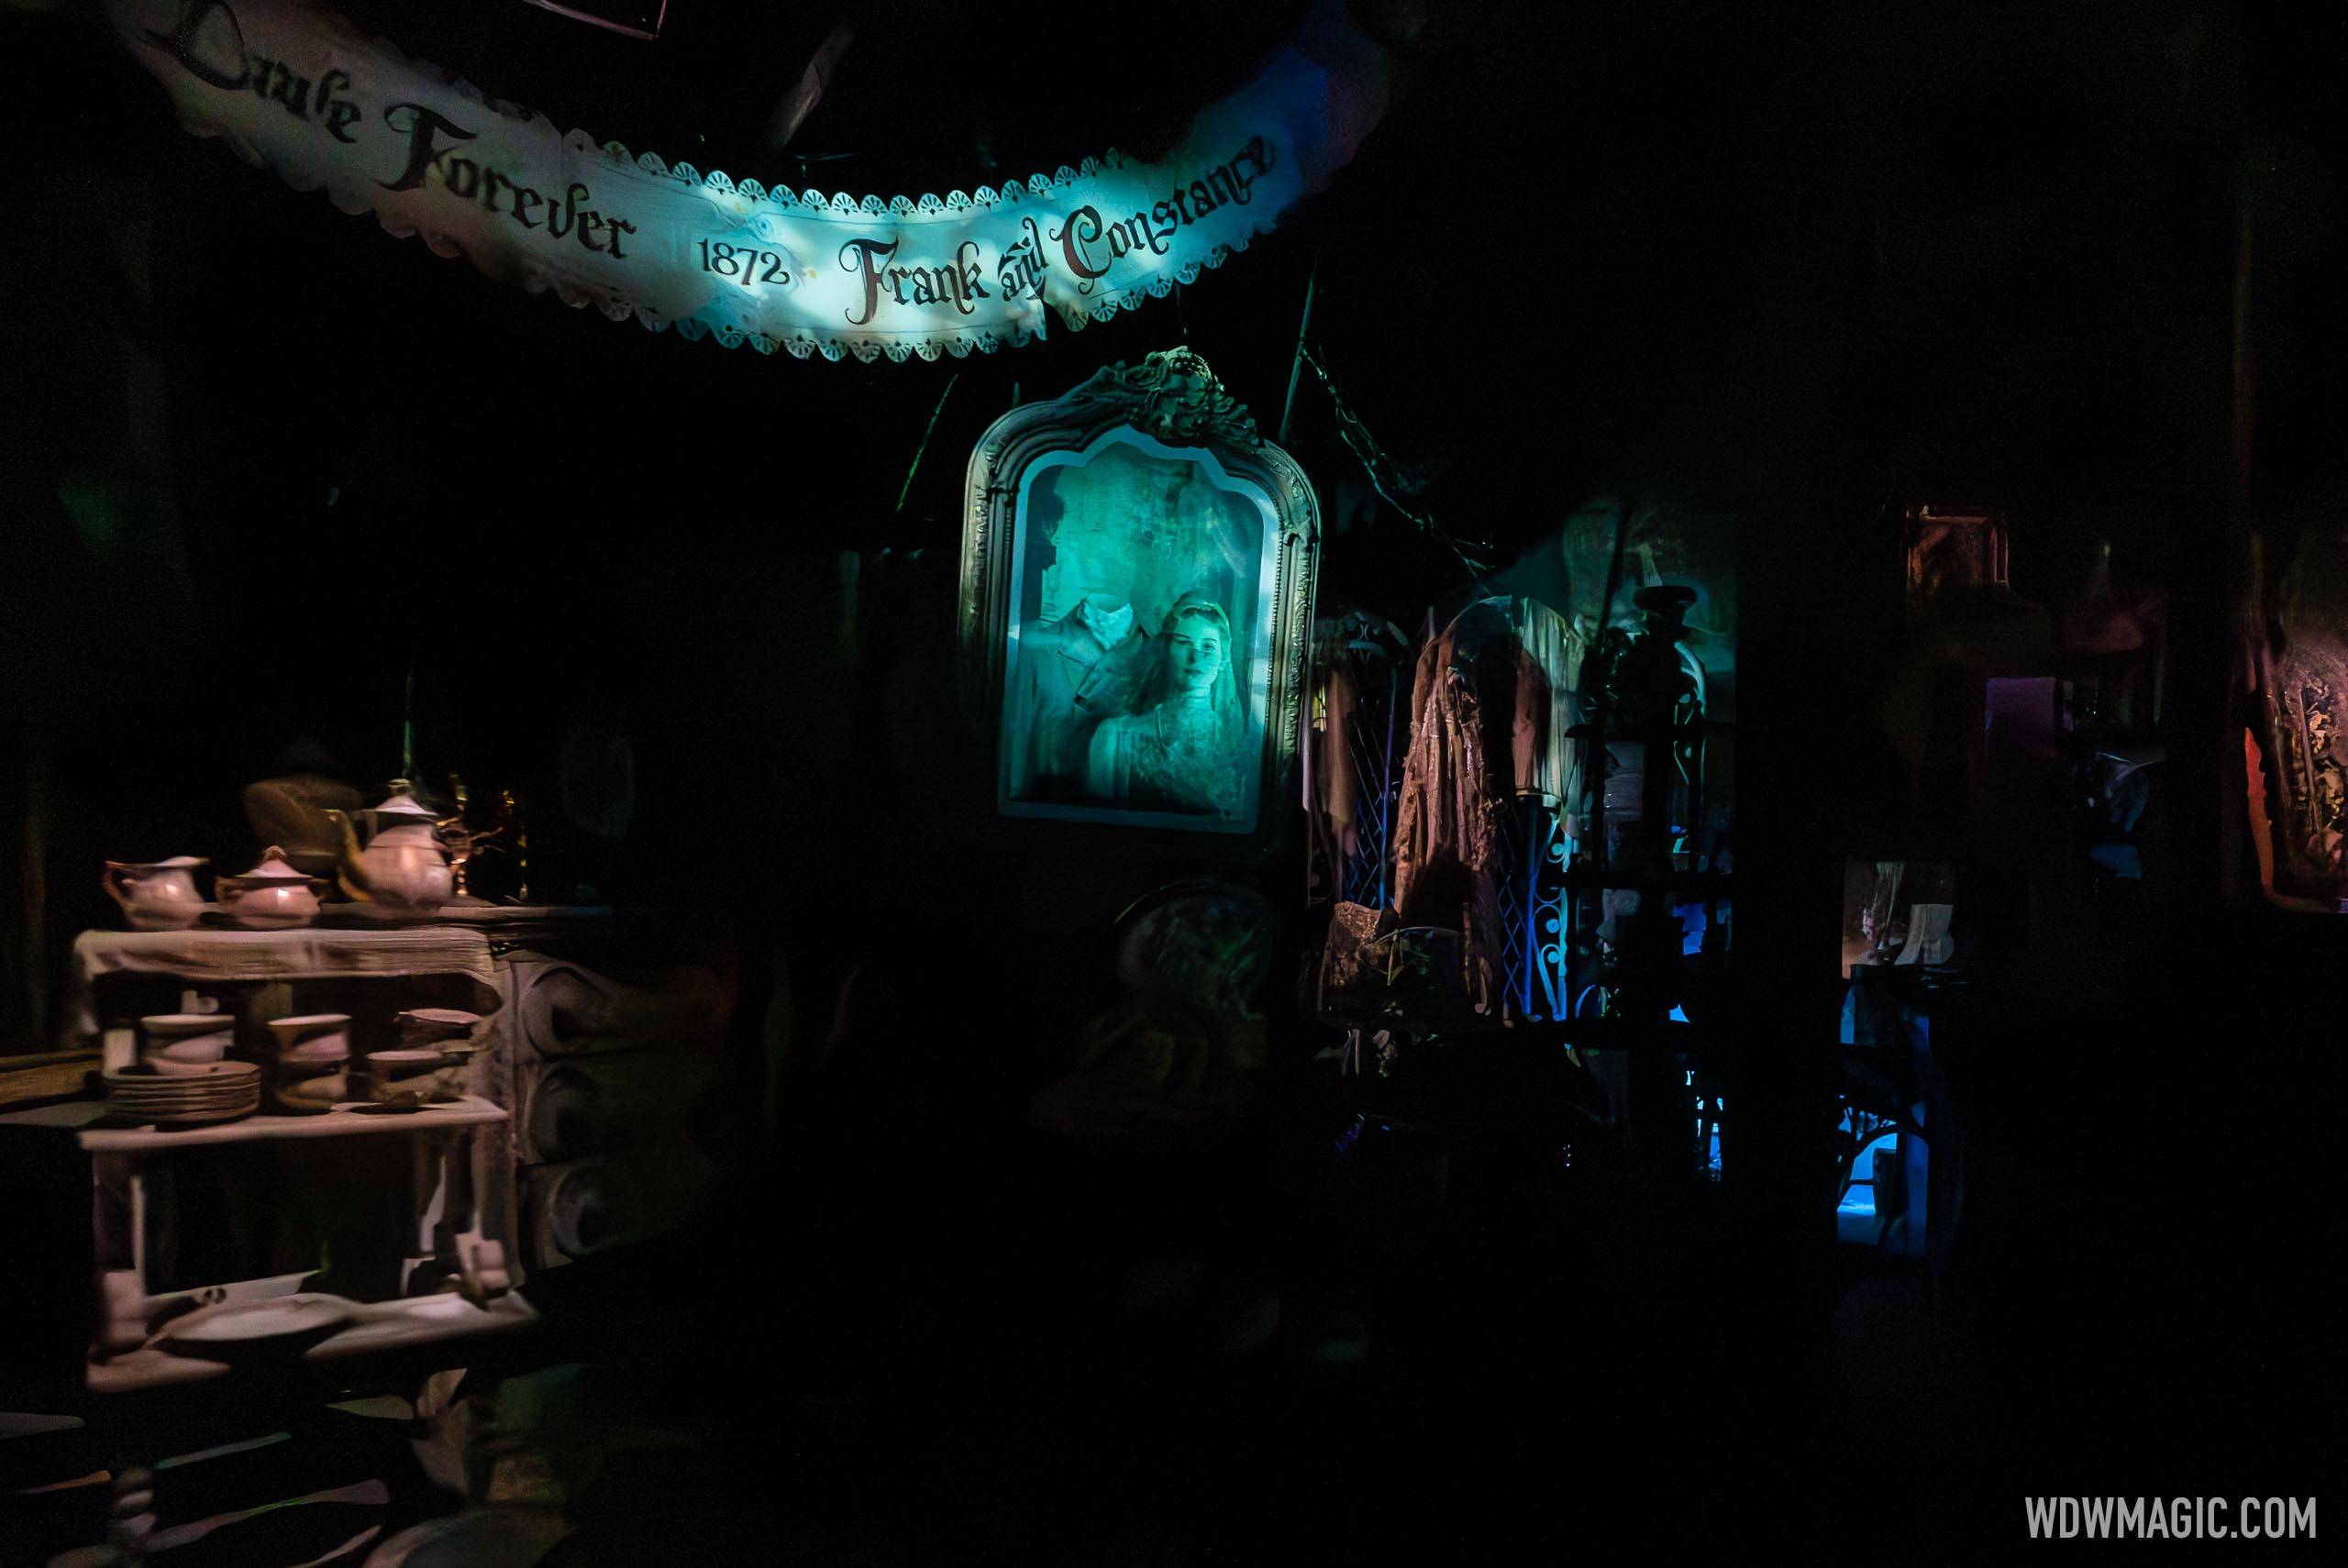 Walt Disney World's Haunted Mansion now closed for refurbishment